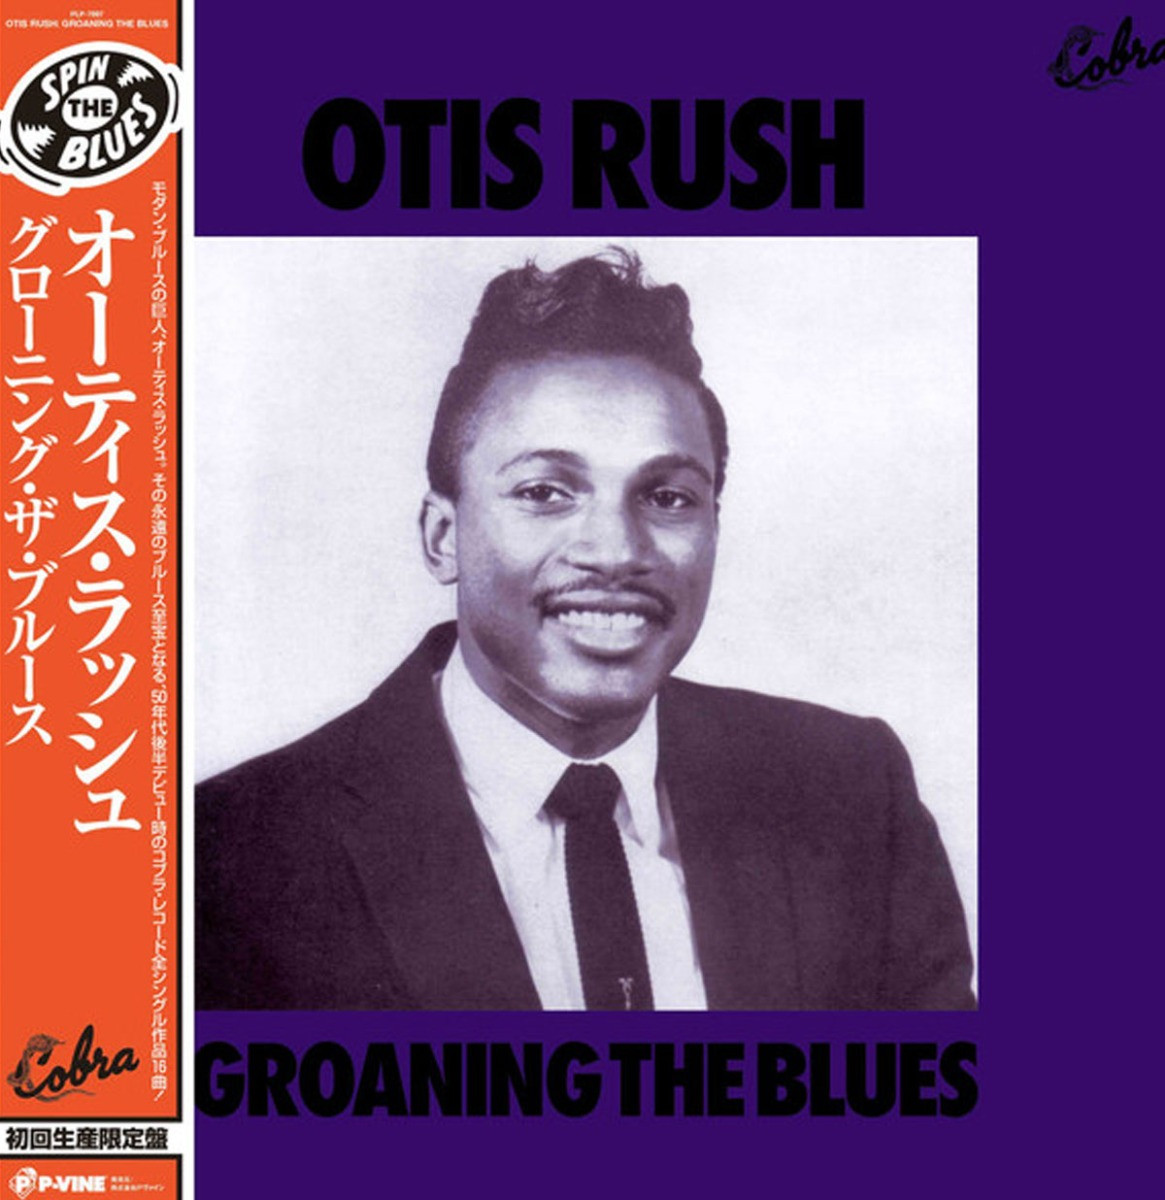 Otis Rush - Groaning The Blues LP